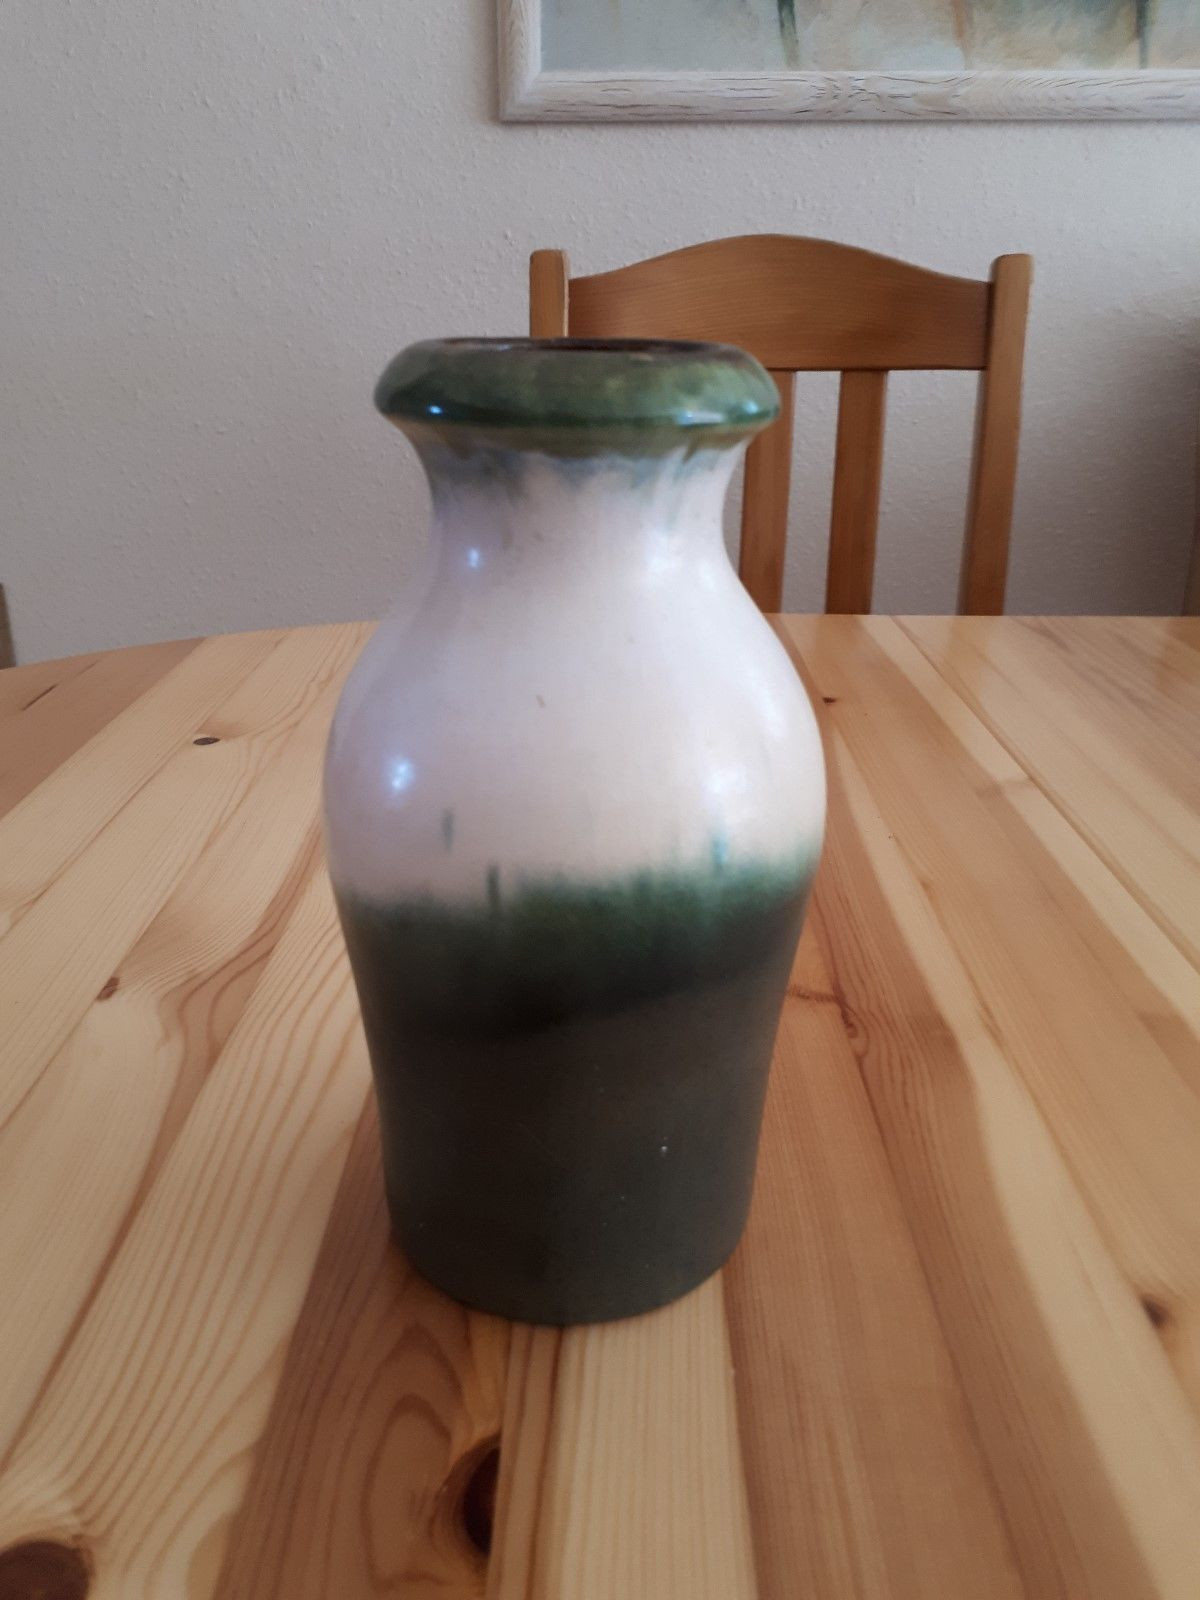 scheurich keramik vase of vase scheurich keramik 18 cm hoch zweifarbig eur 100 picclick de with regard to vase scheurich keramik 18 cm hoch zweifarbig 1 von 4